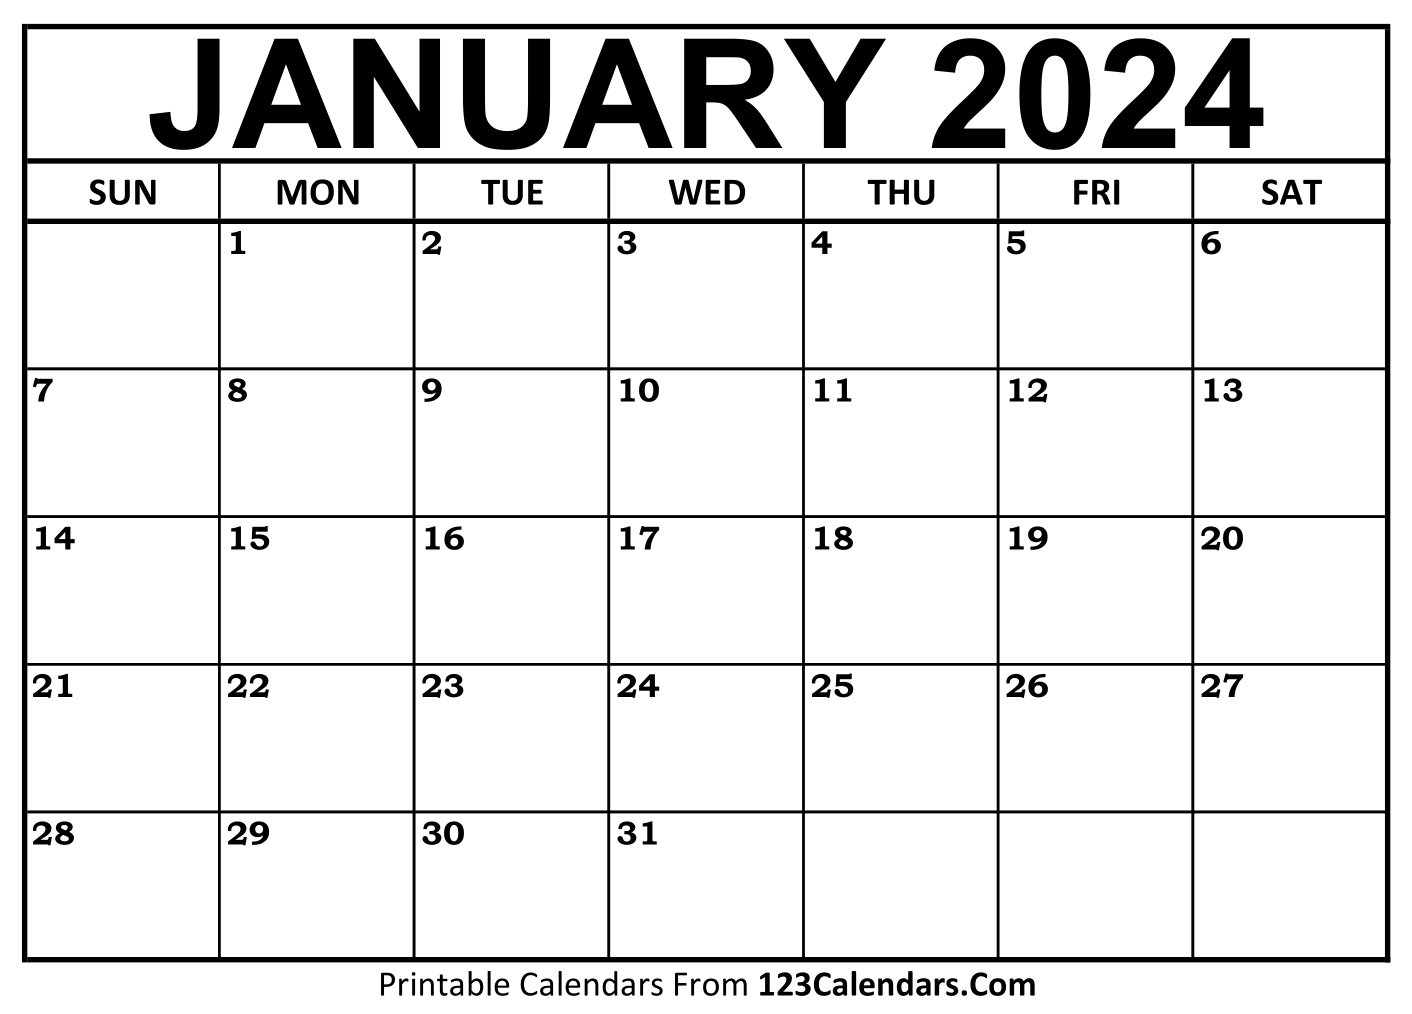 Printable January 2024 Calendar Templates - 123Calendars | Printable Calendar 2024 January Pdf